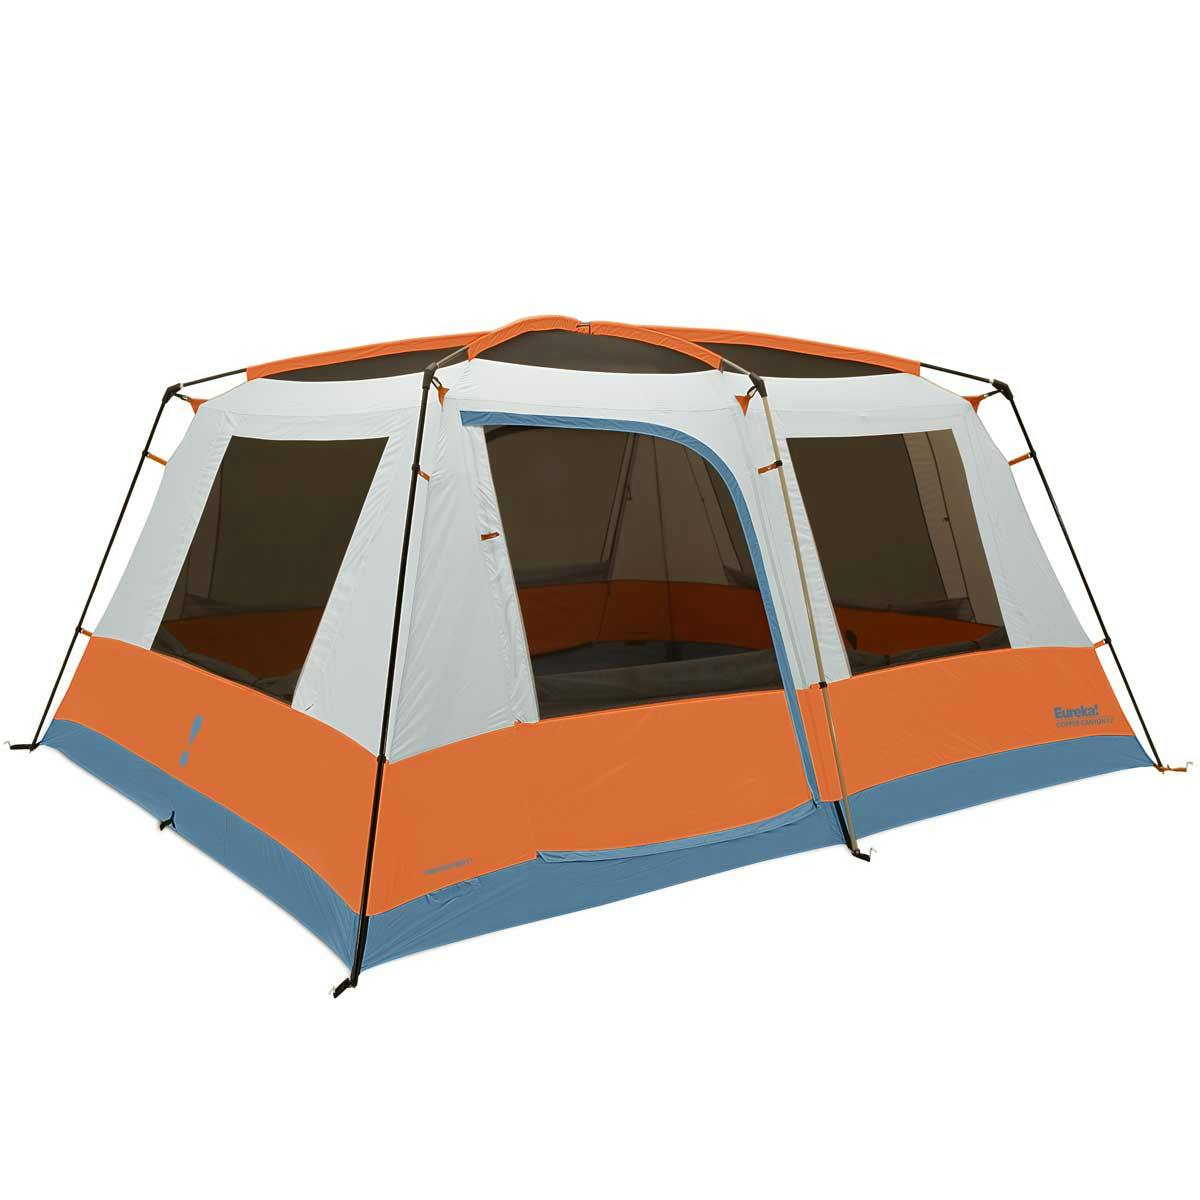 Eureka! Copper Canyon LX Tent